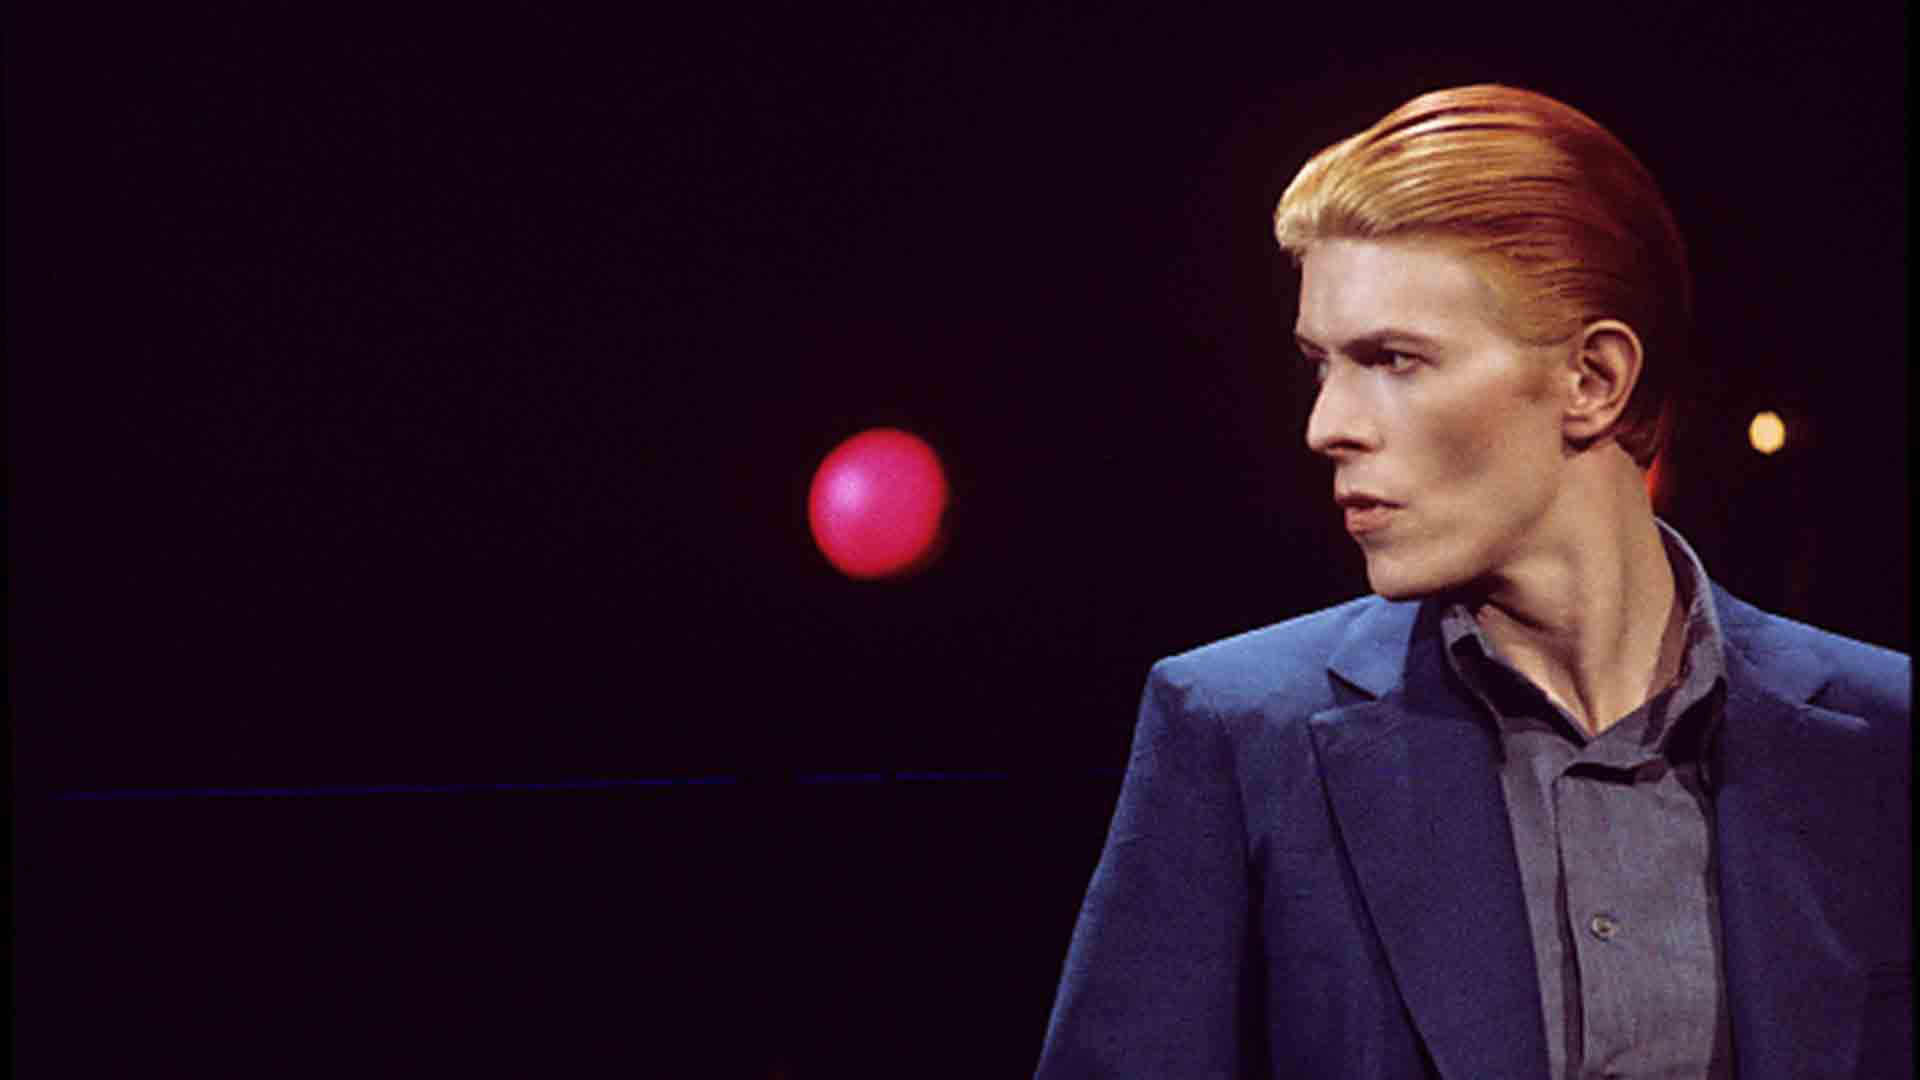 David Bowie - David Bowie Rare Photograph - HD Wallpaper 